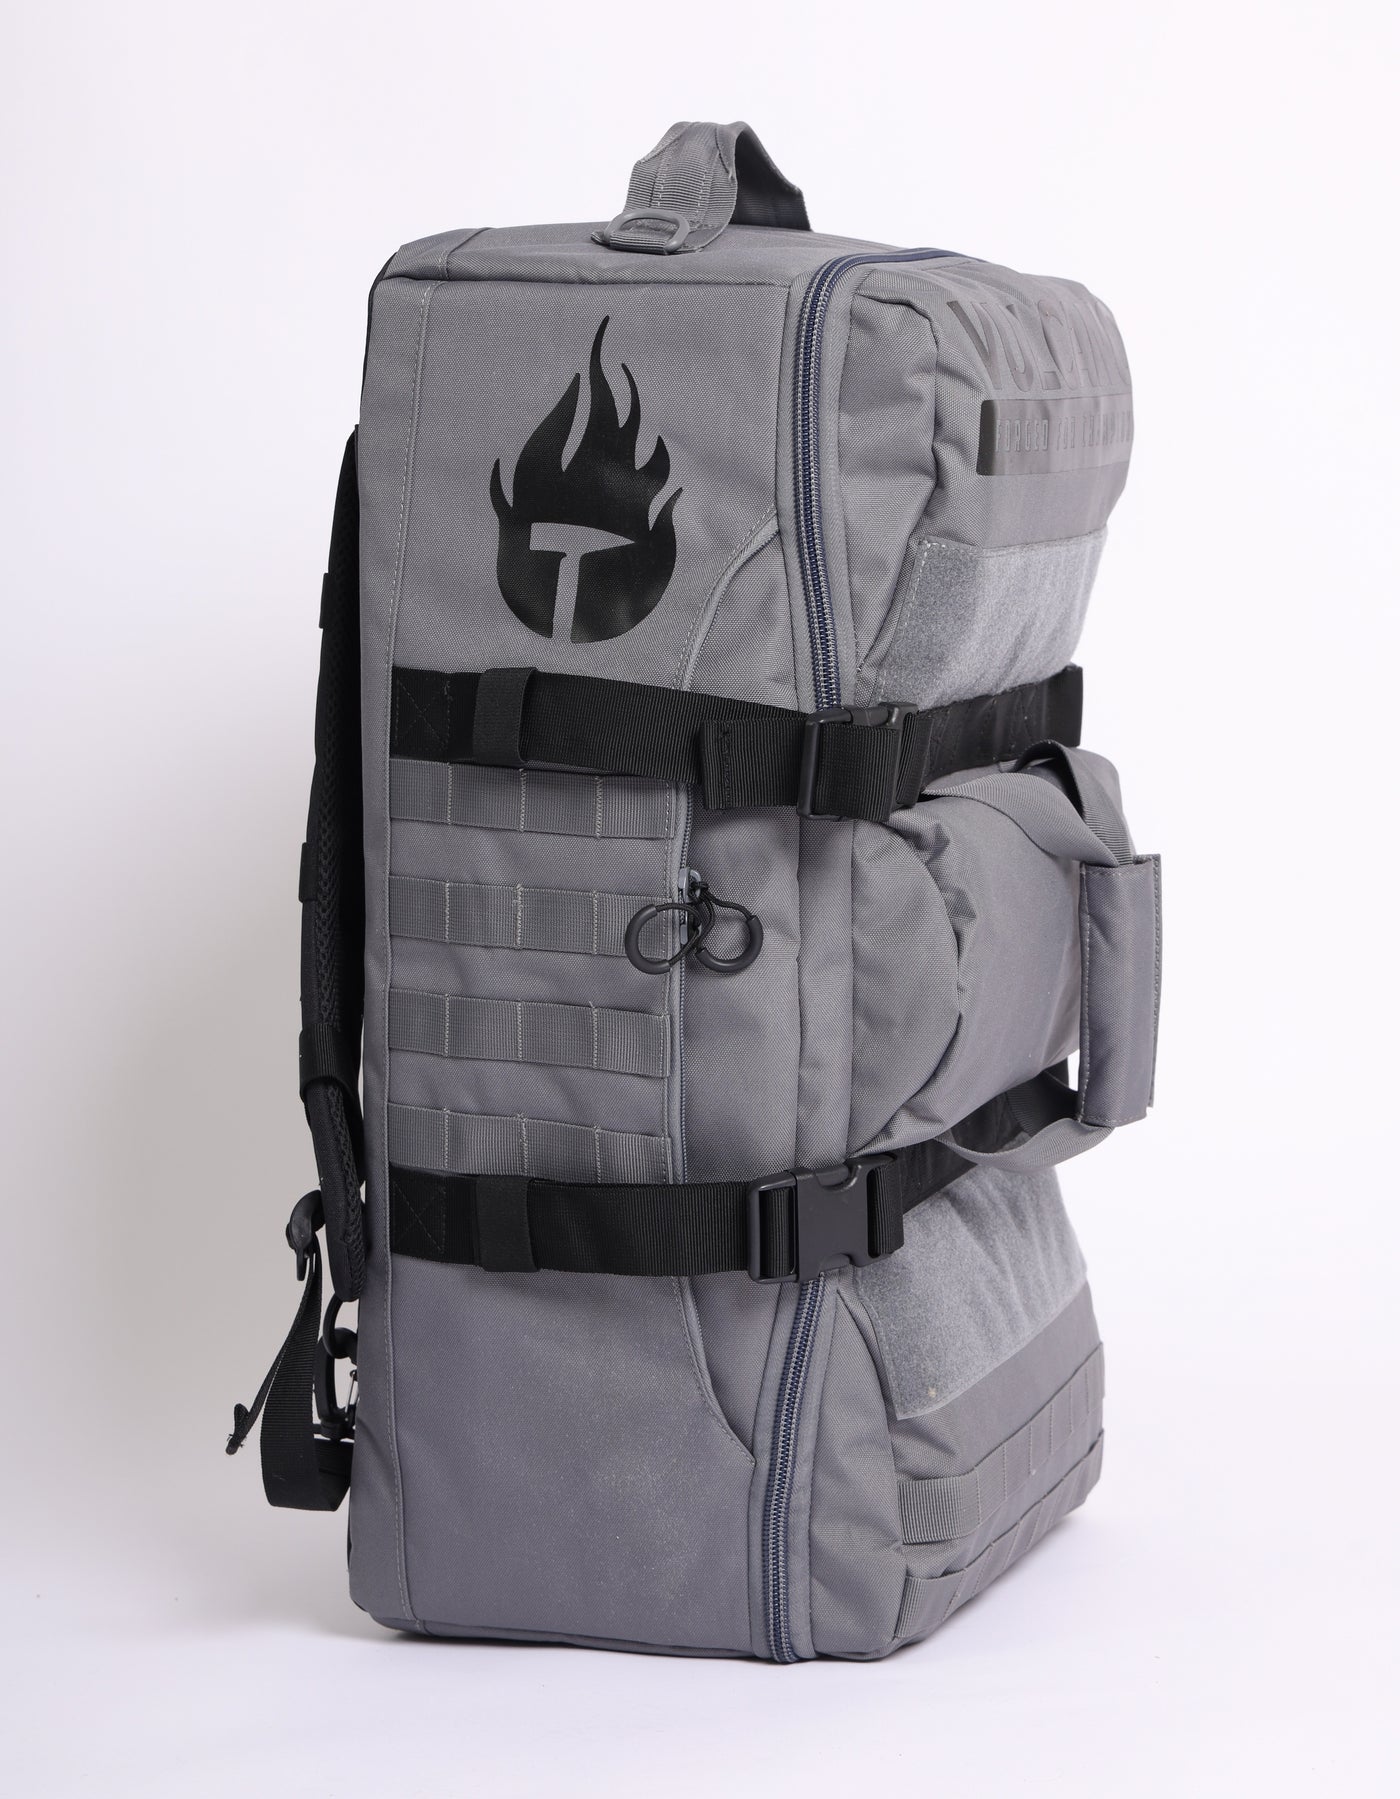 Fire 1.5 Backpack - Gray/Black